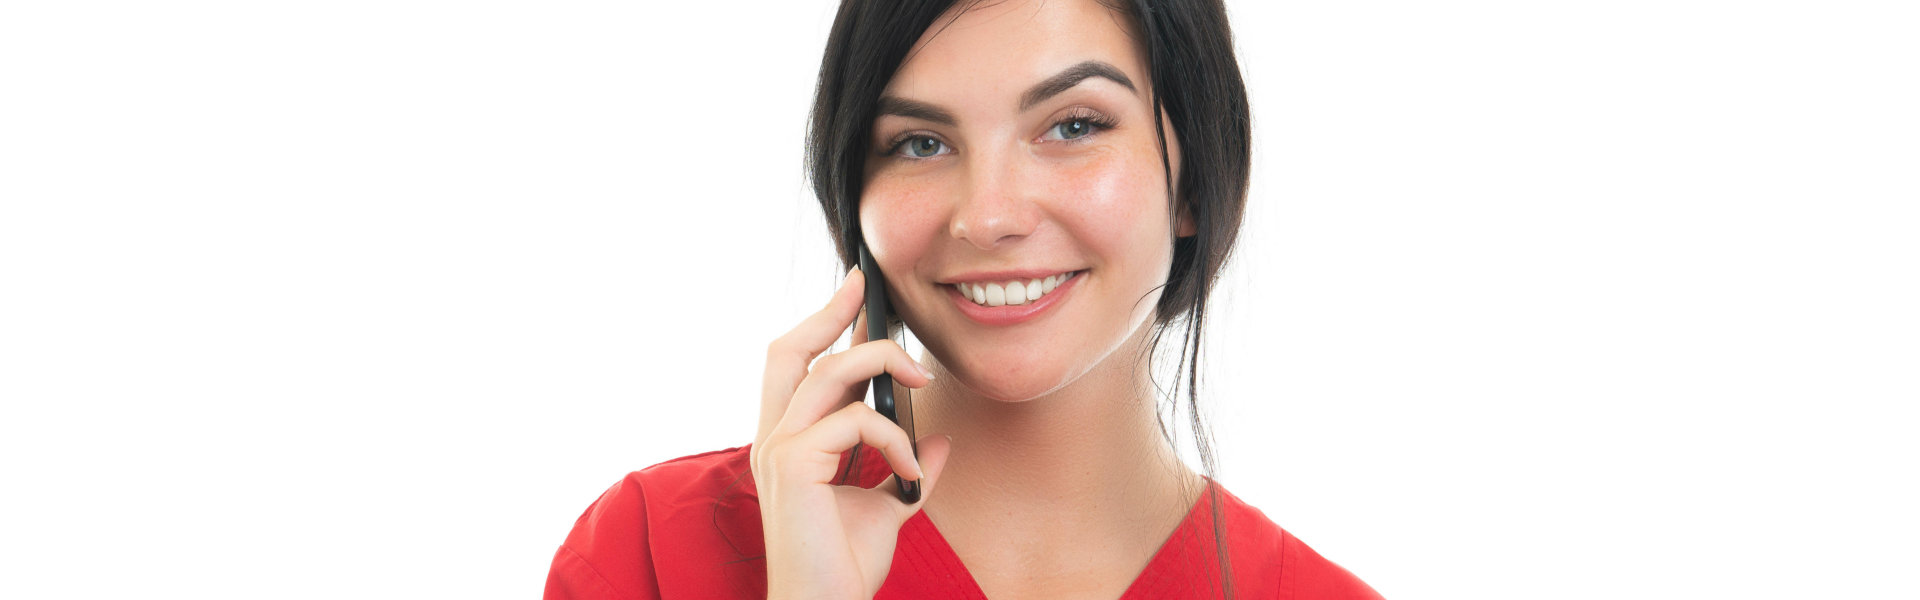 nurse smiling while having a phone call